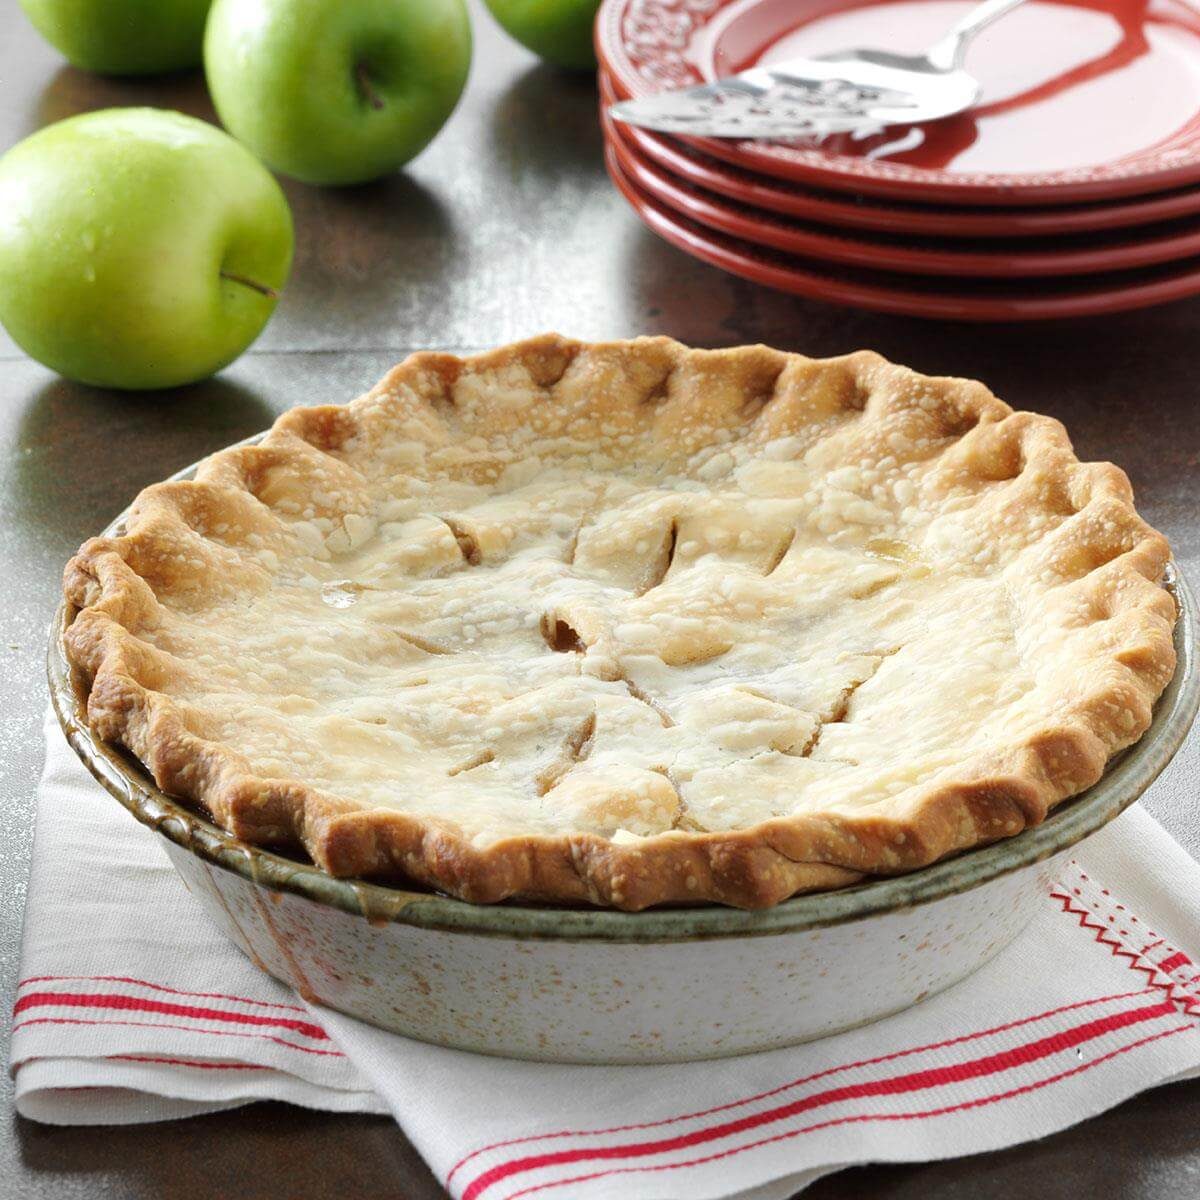 Washington: Apple Pie